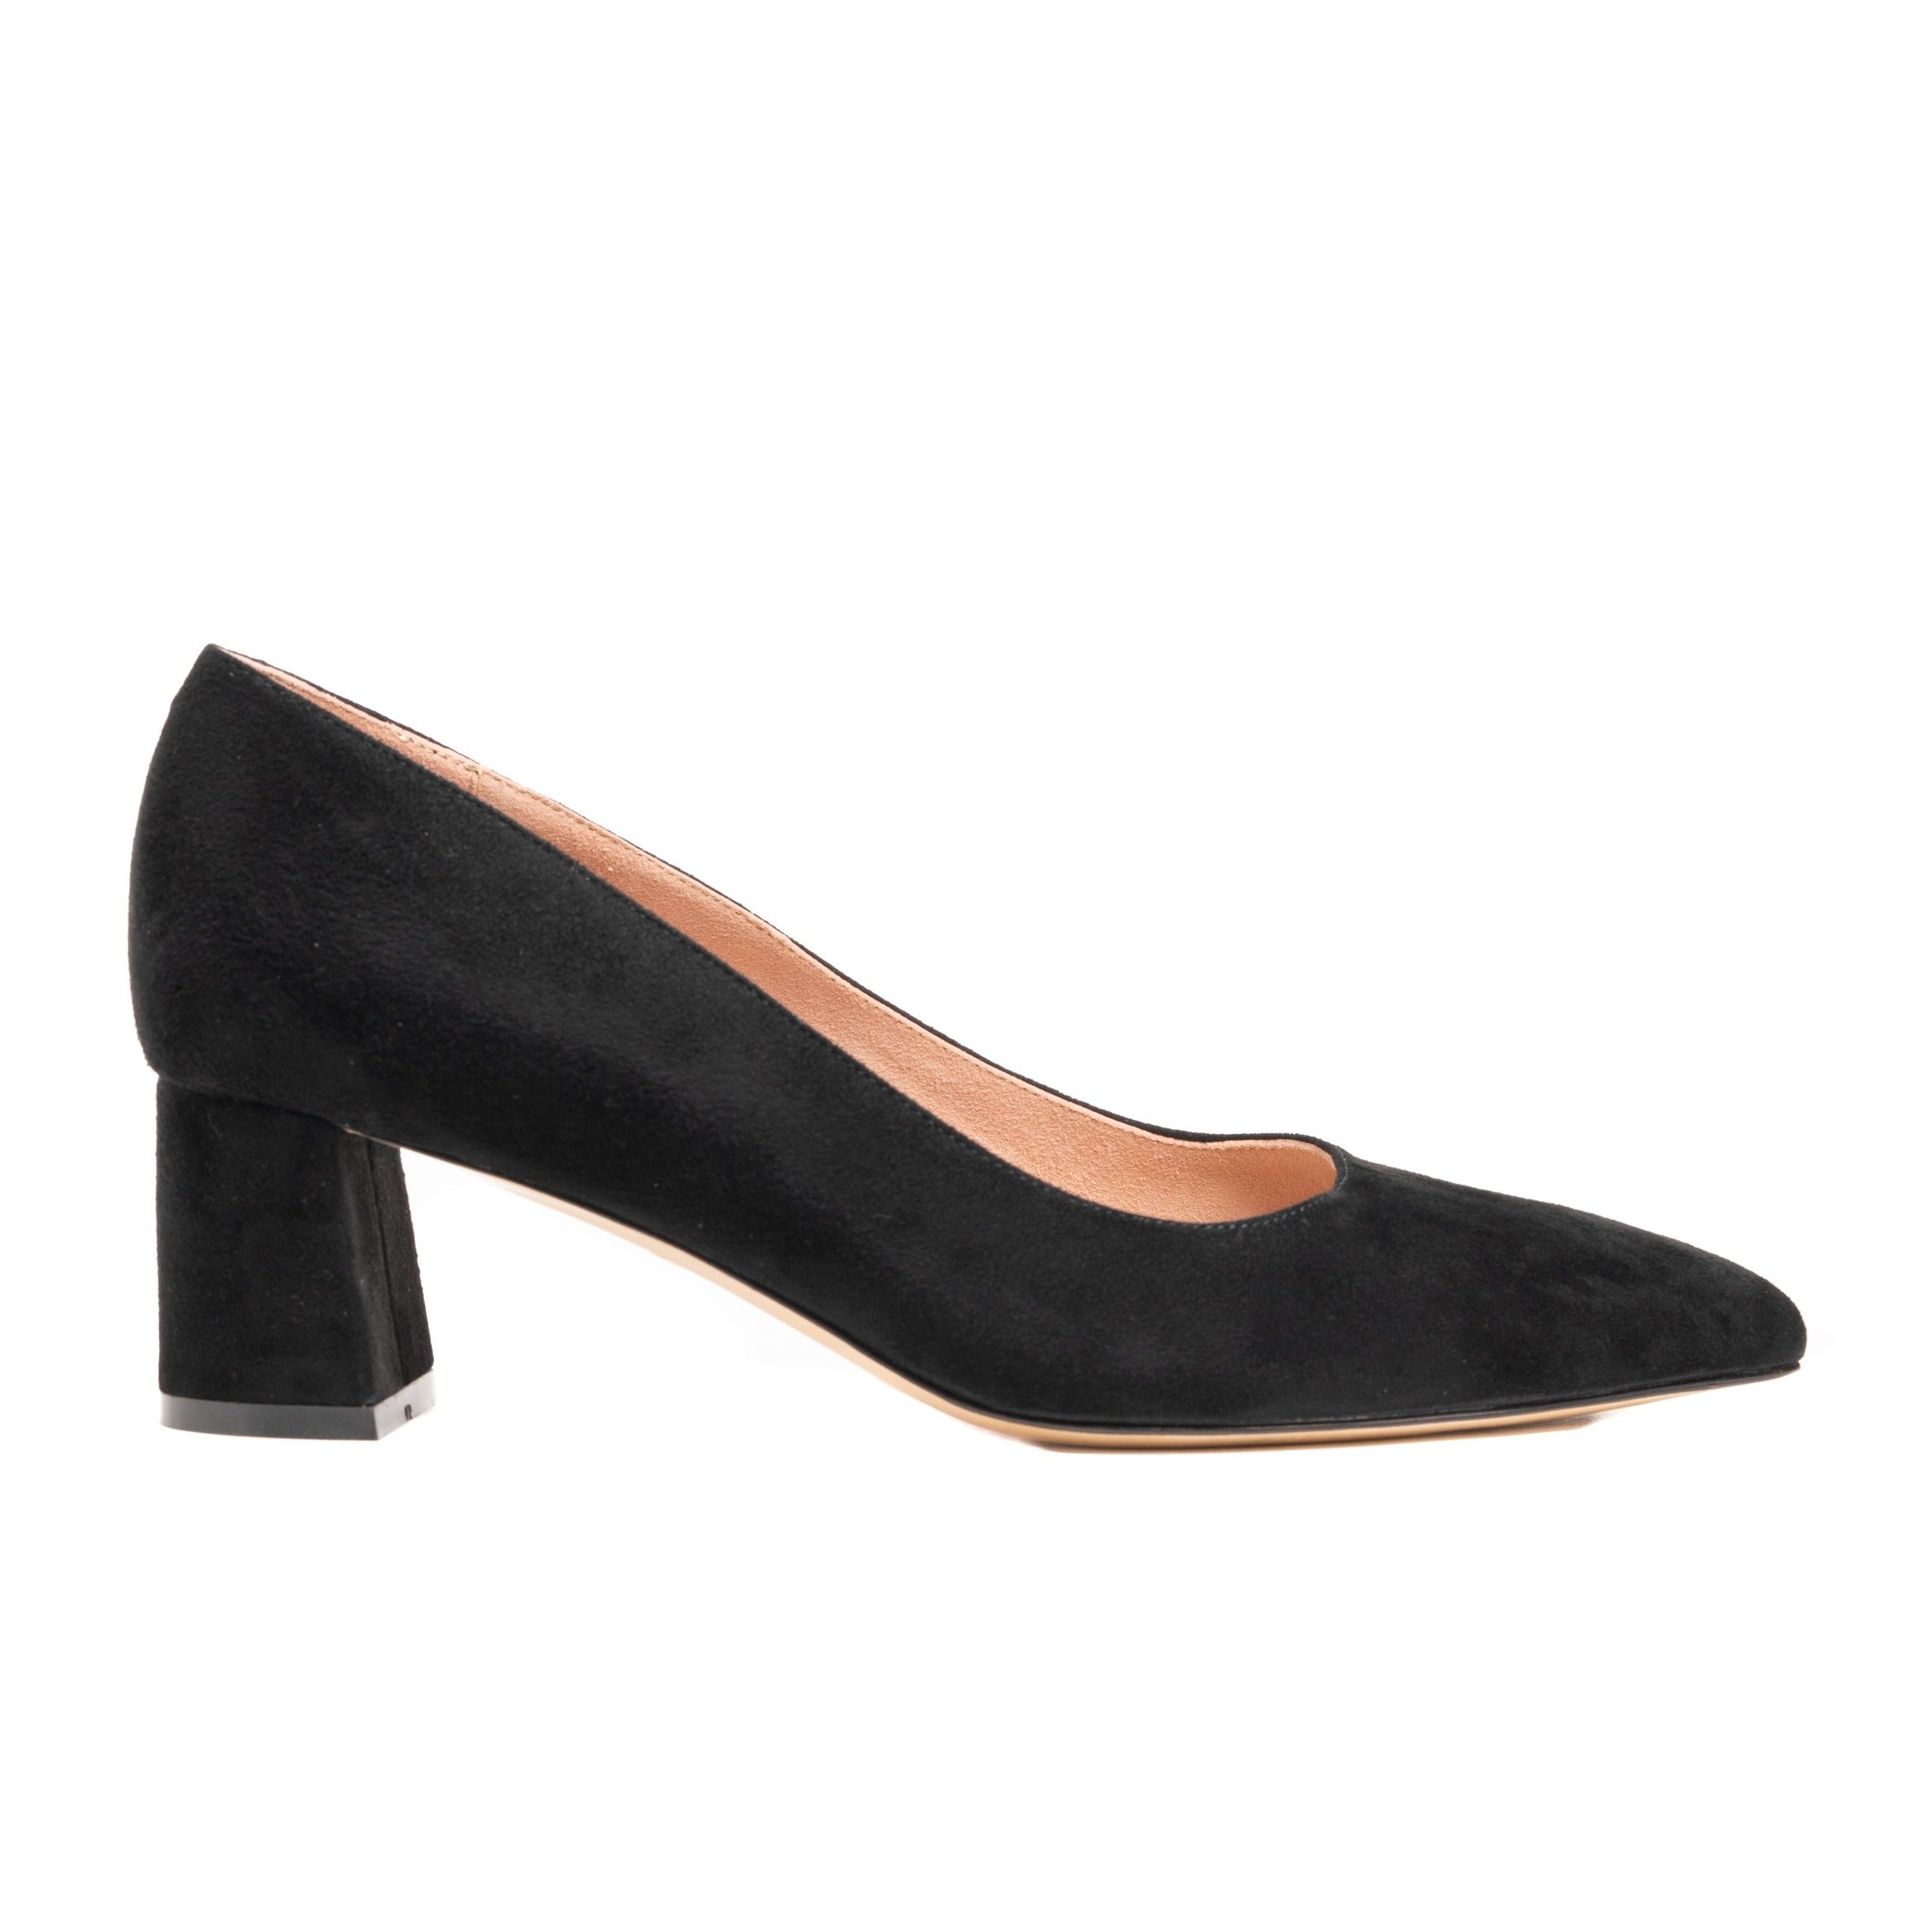 Black Suede Lower Block Heel 2-inch